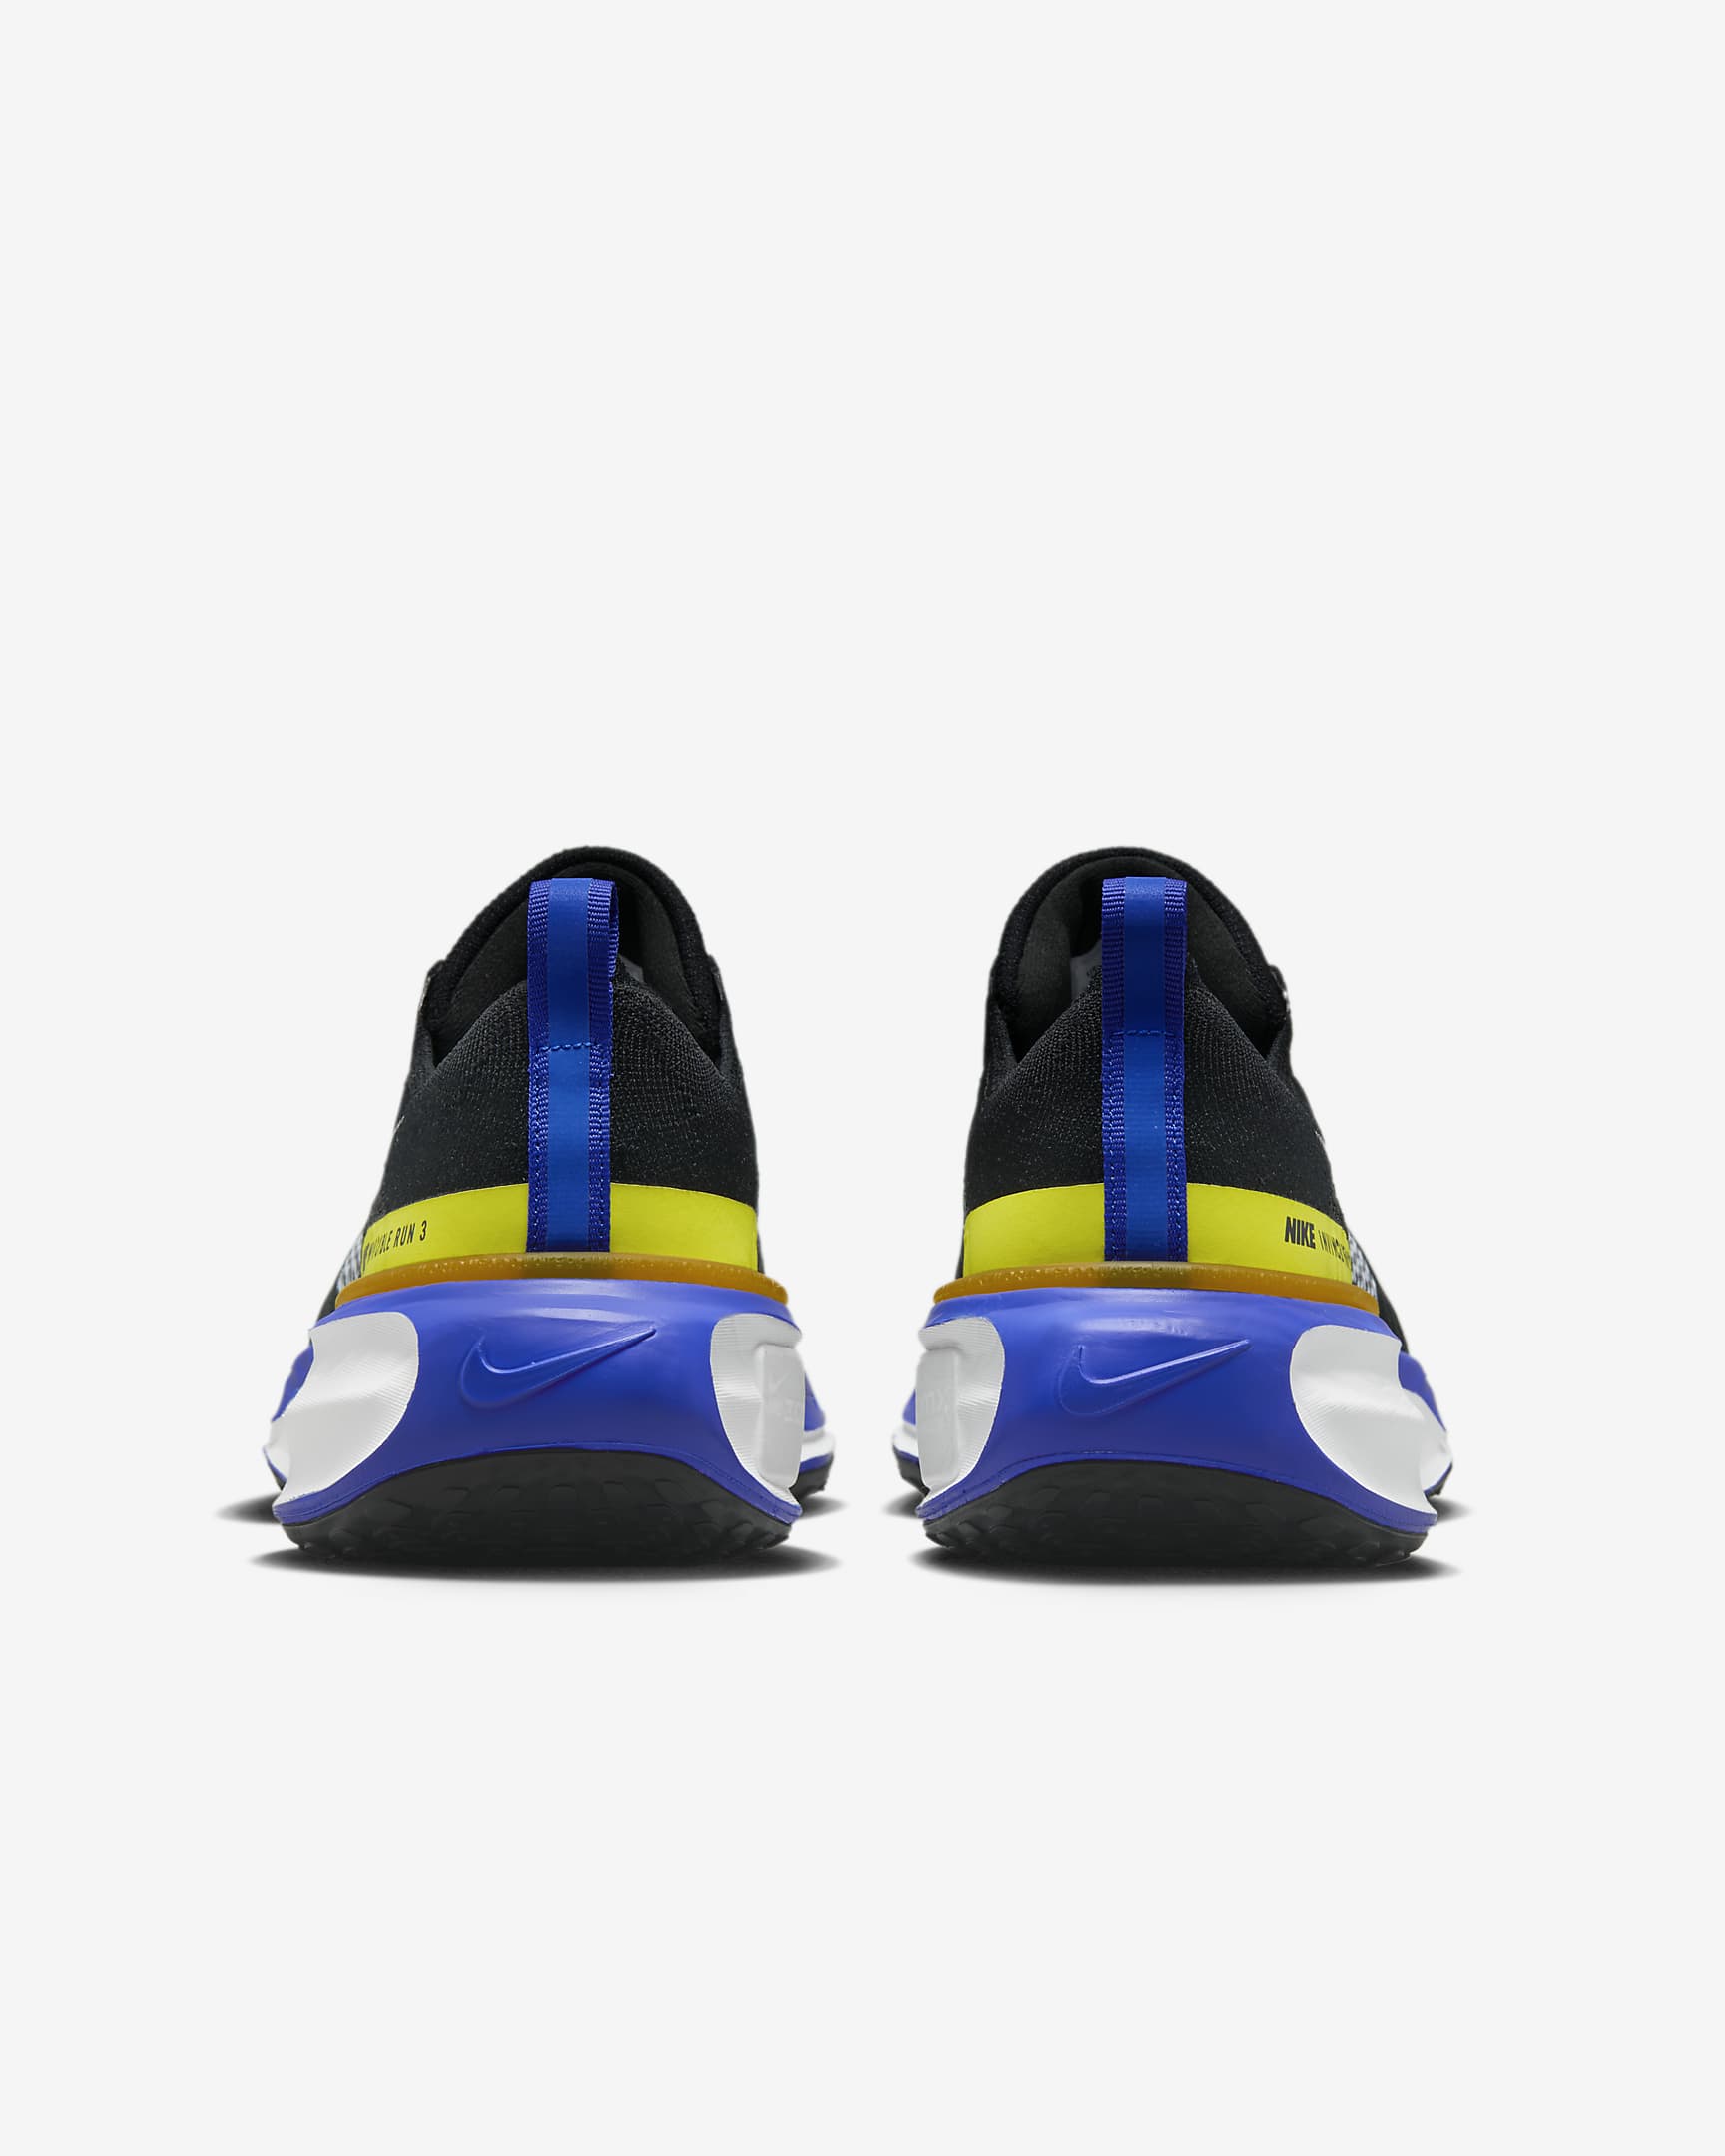 Nike Invincible 3 Men's Road Running Shoes - Black/Racer Blue/High Voltage/White